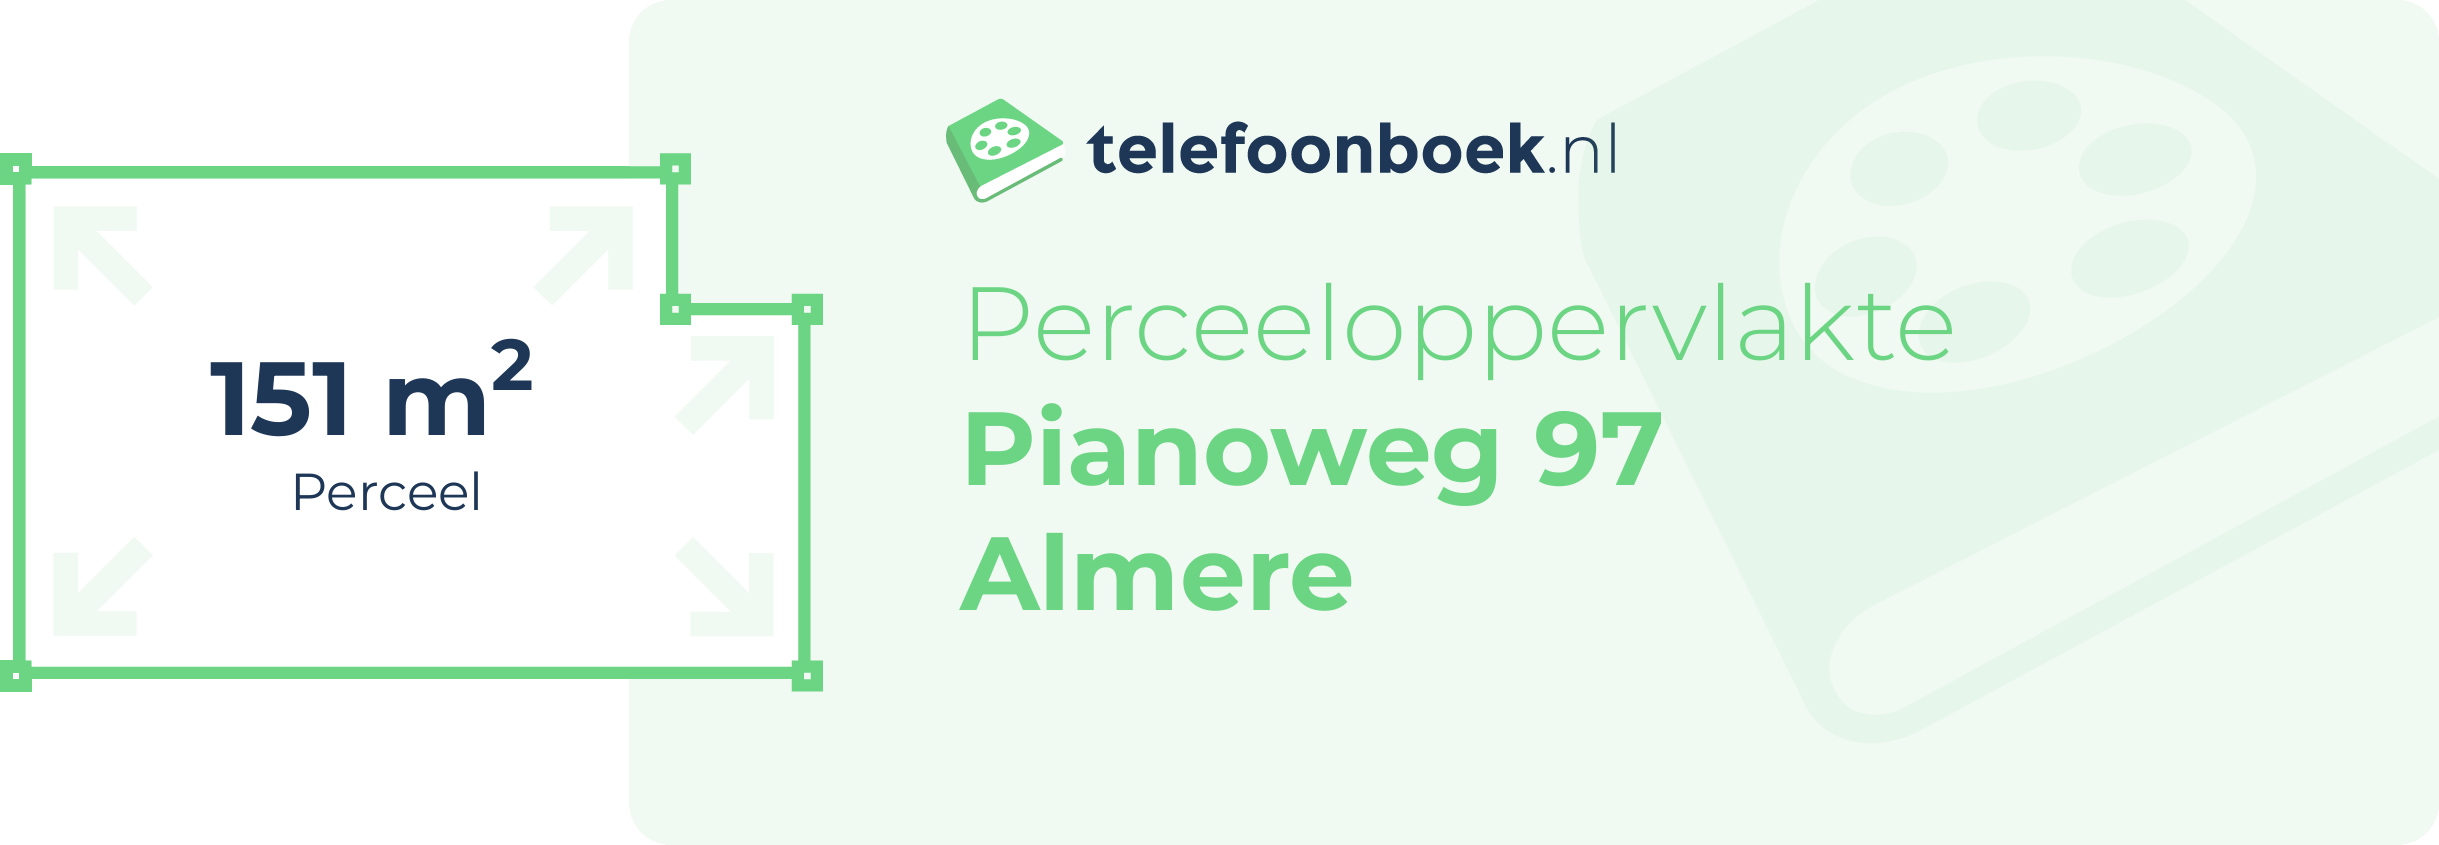 Perceeloppervlakte Pianoweg 97 Almere